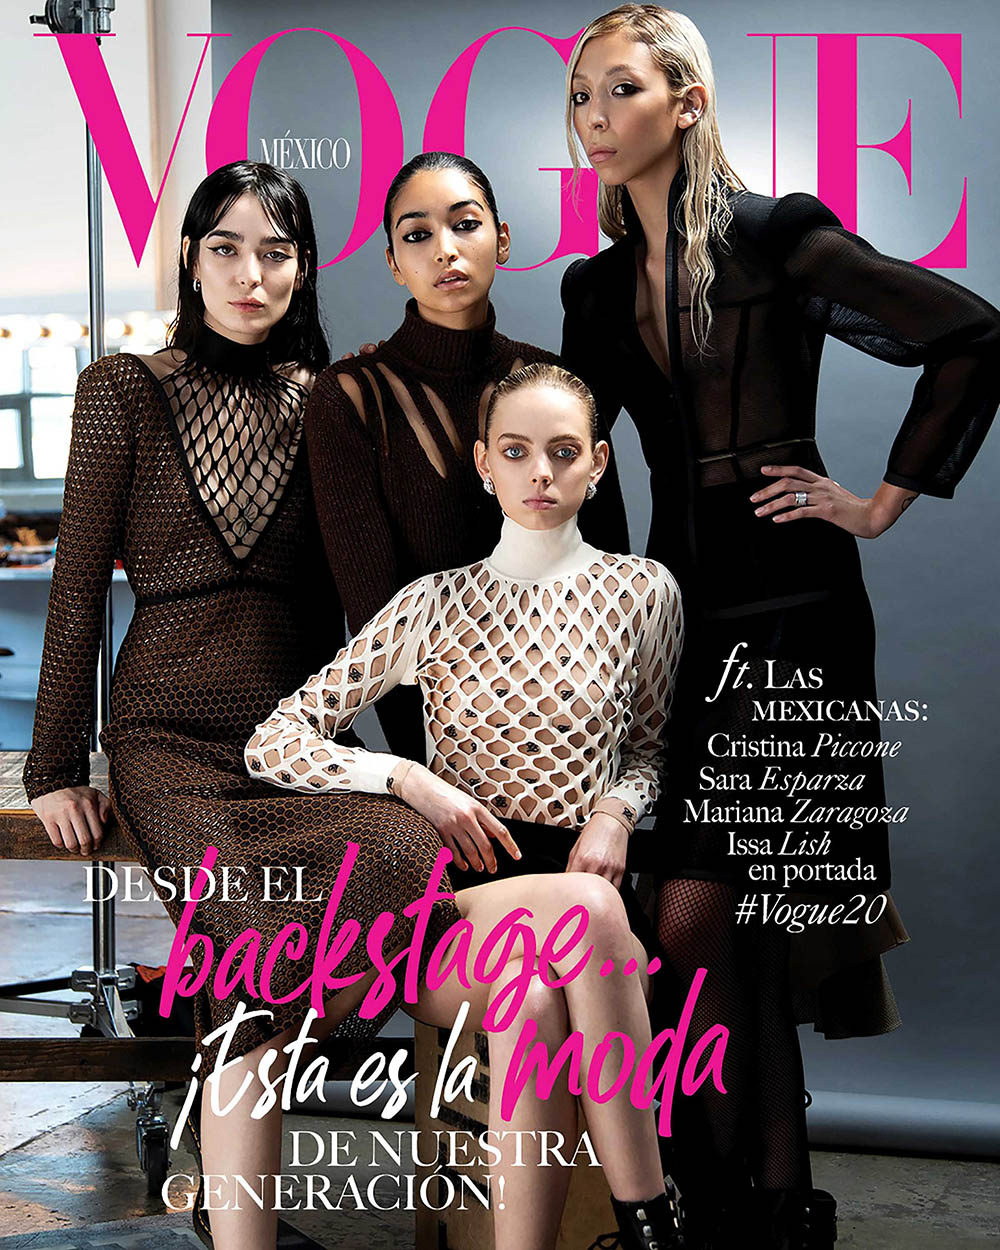 Vogue Mexico September 2019 cover by Santiago & Mauricio